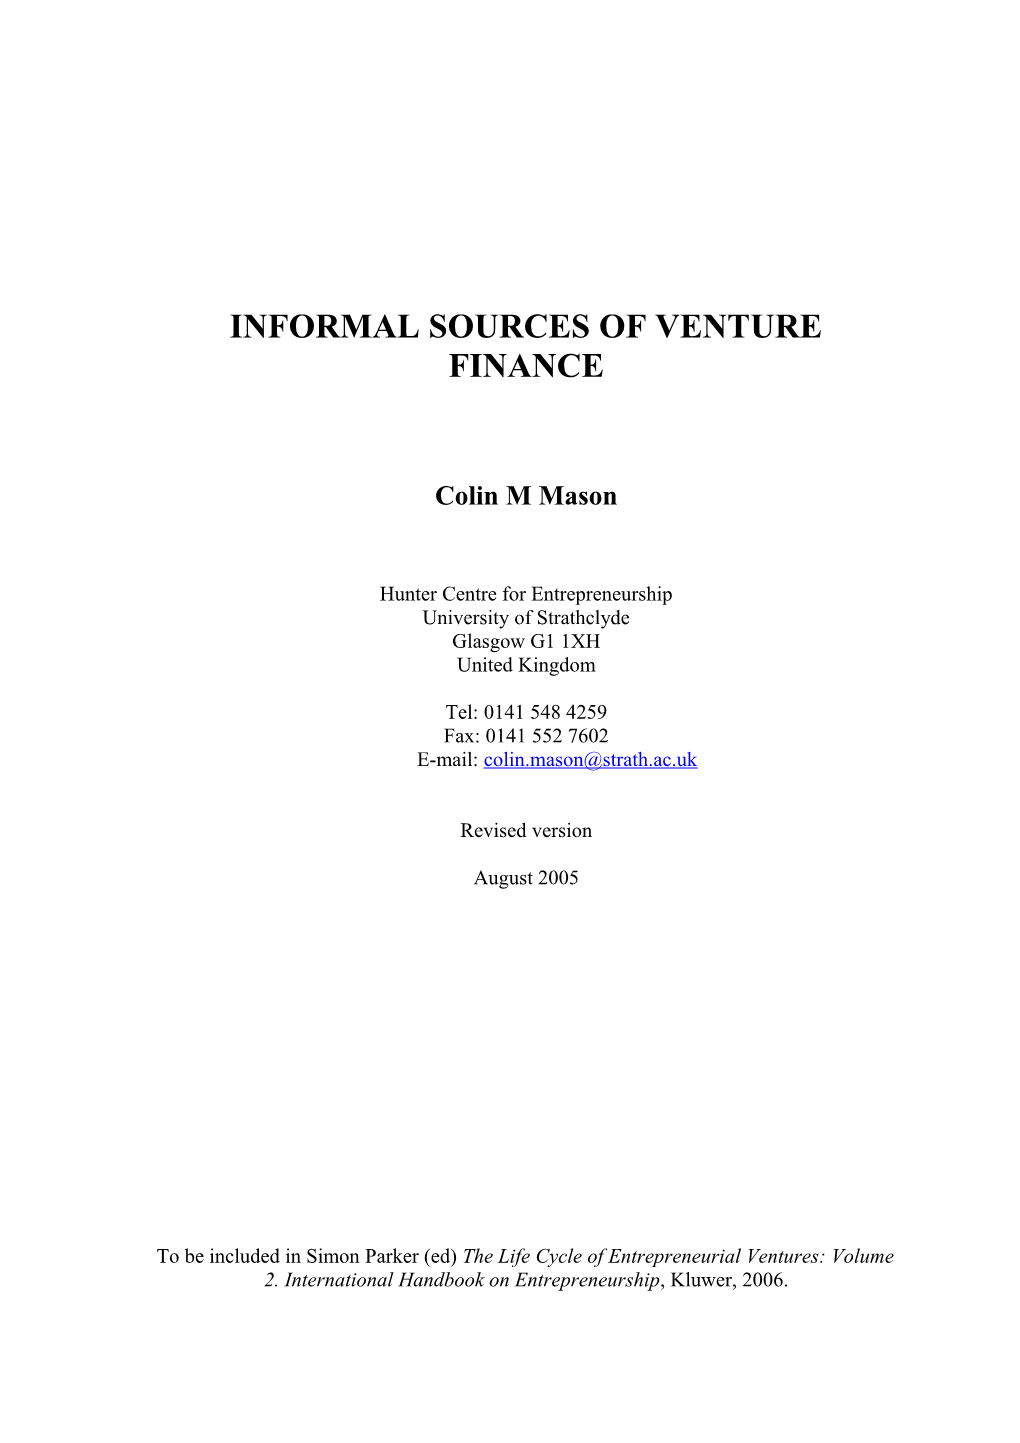 Informal Sources of Venture Finance